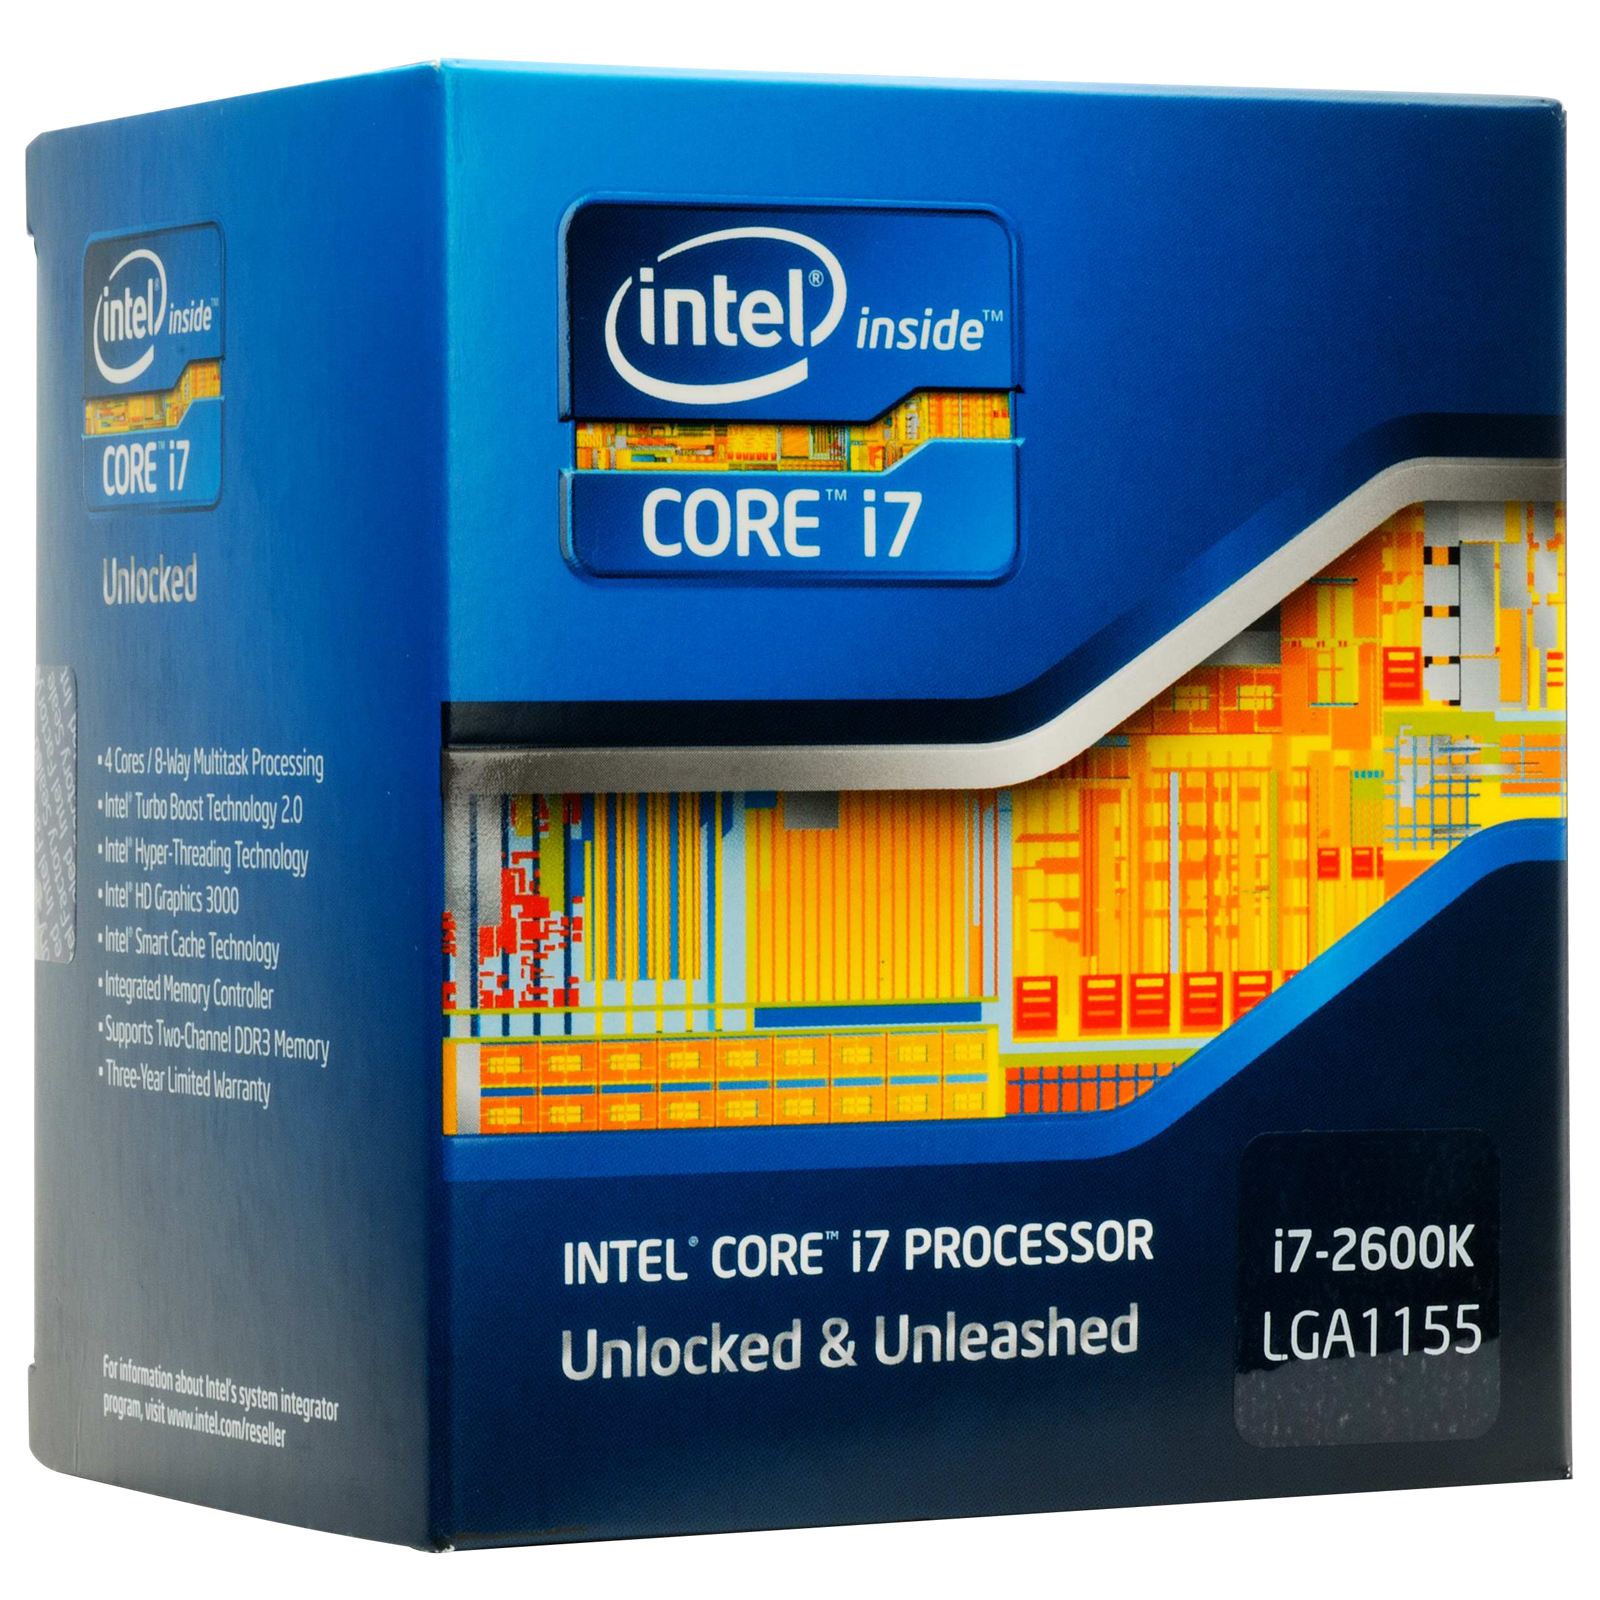 Intel i7 2600